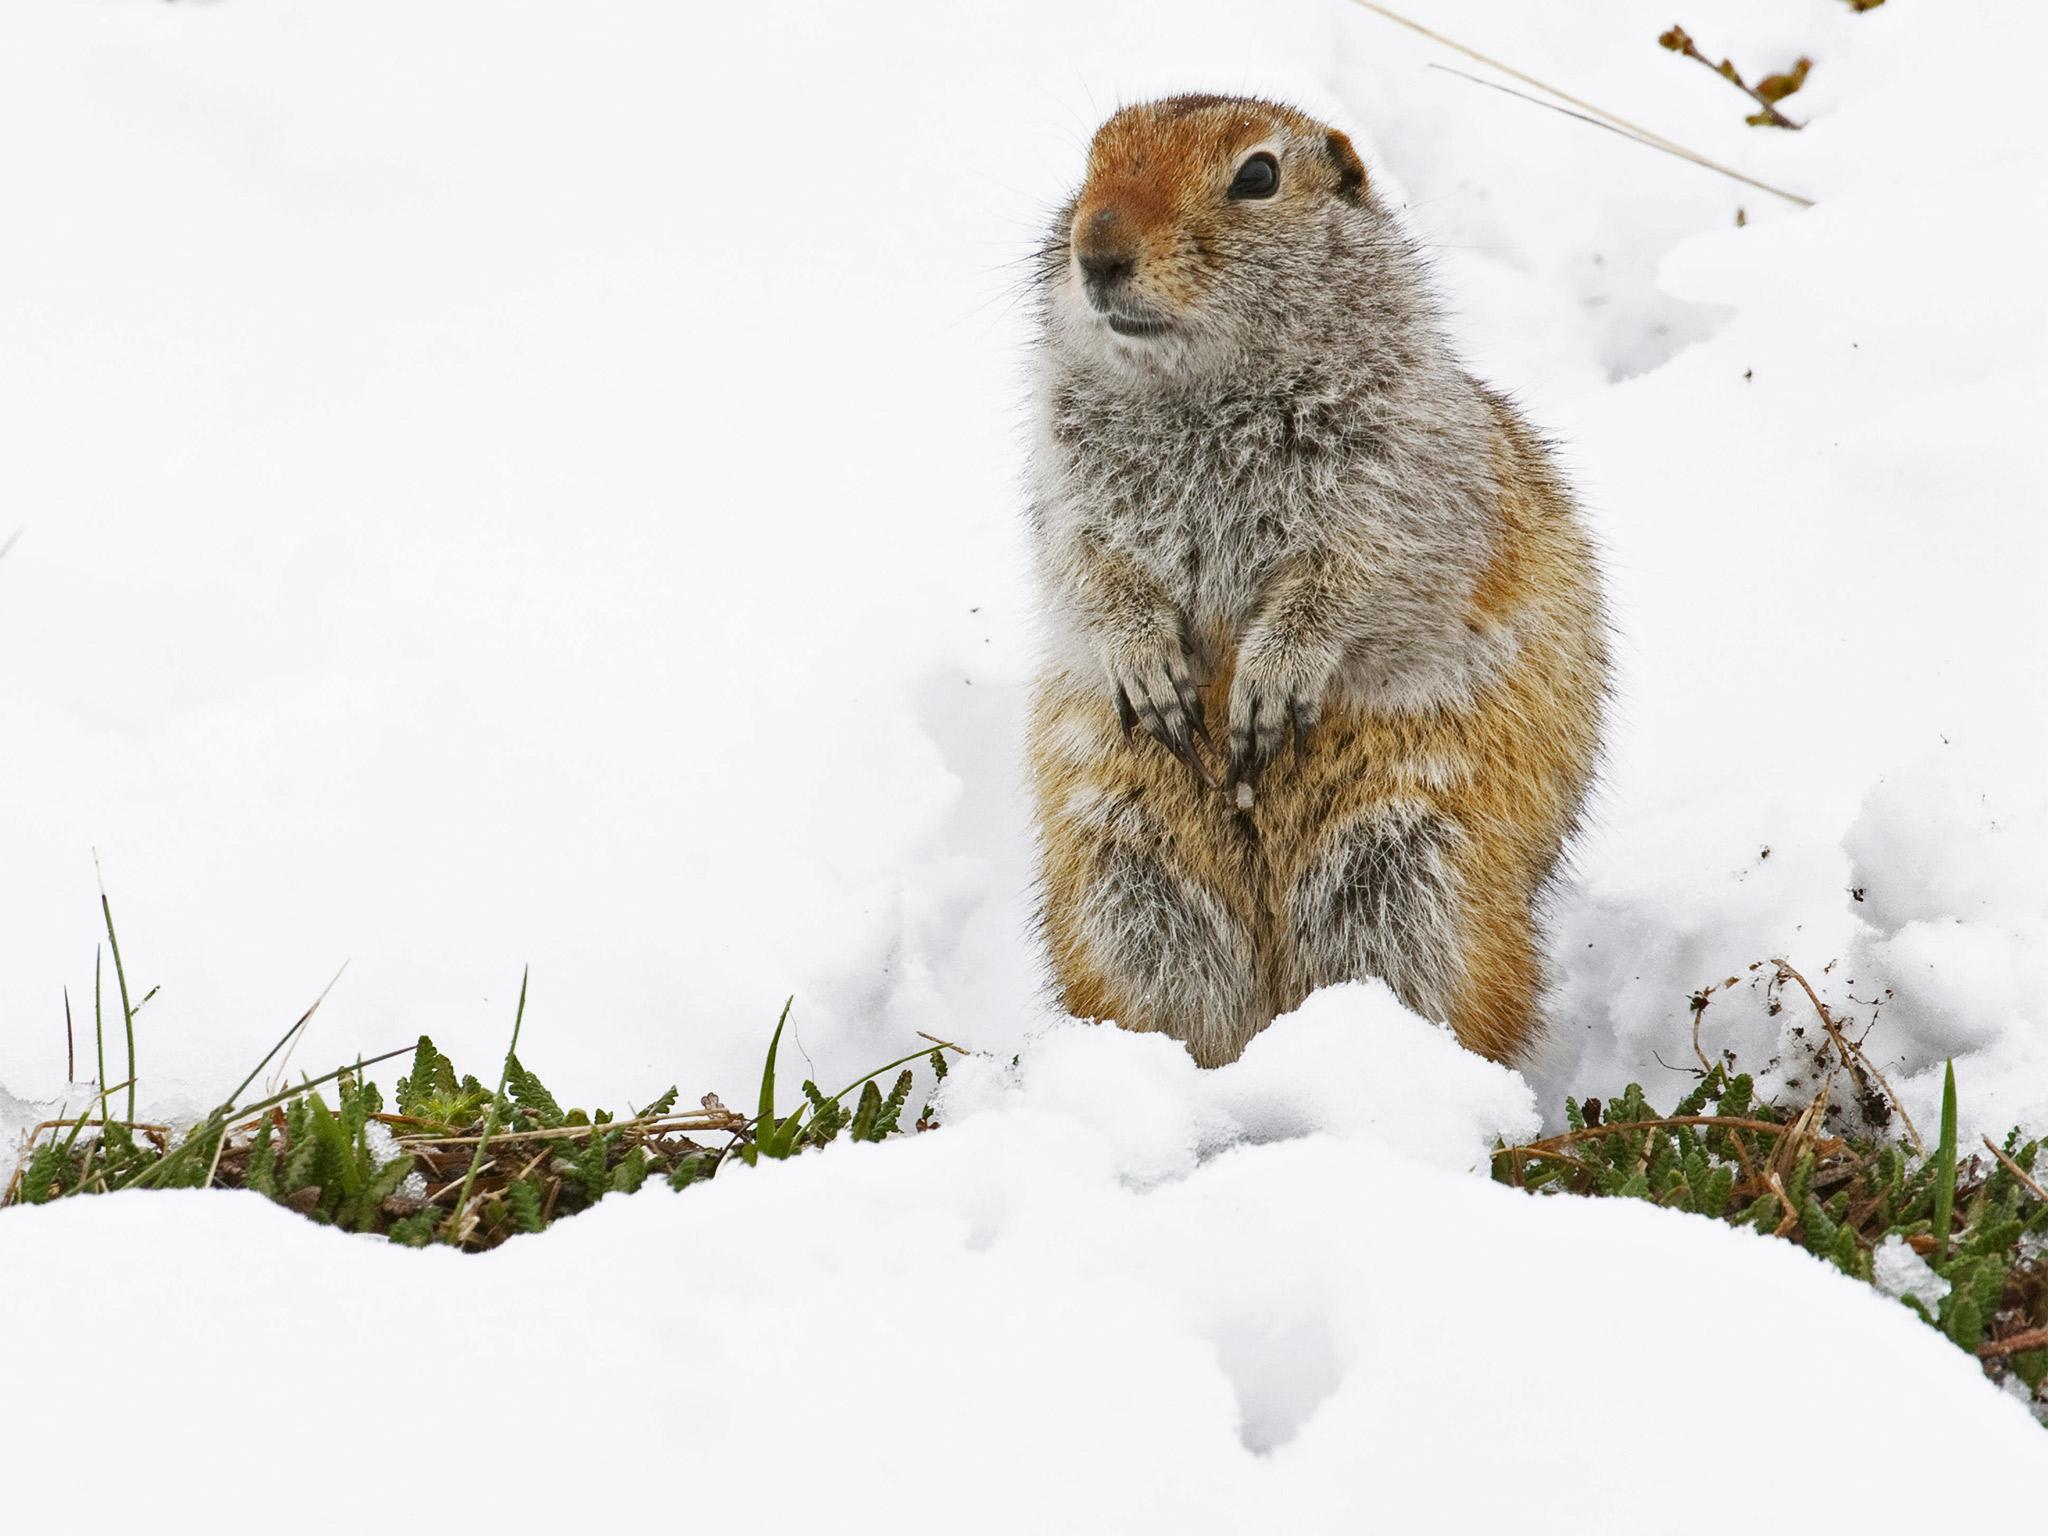 Arctic ground squirrels are speeding up methane release